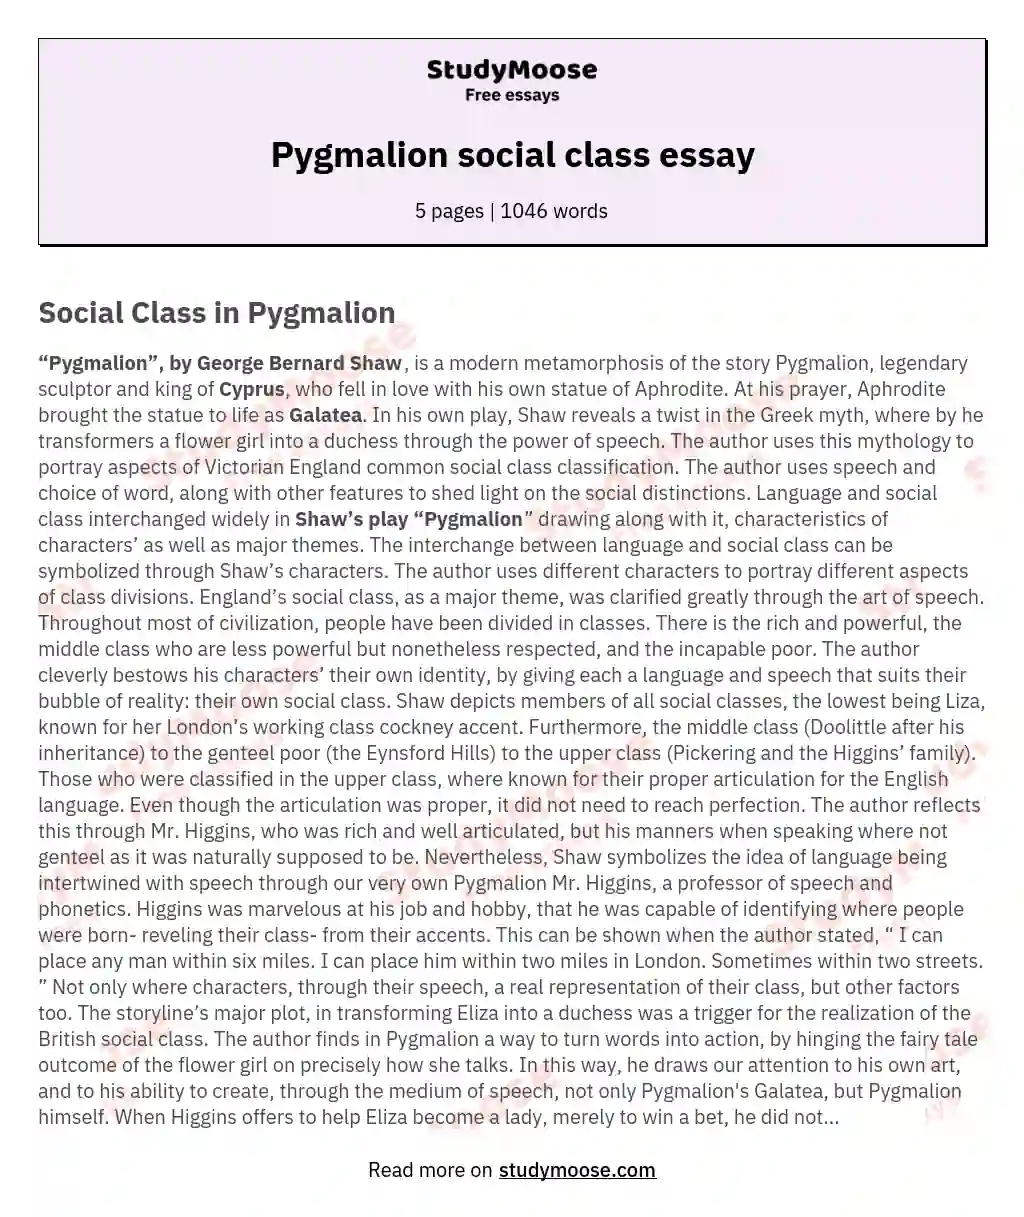 Pygmalion by George Bernard Shaw | Goodreads